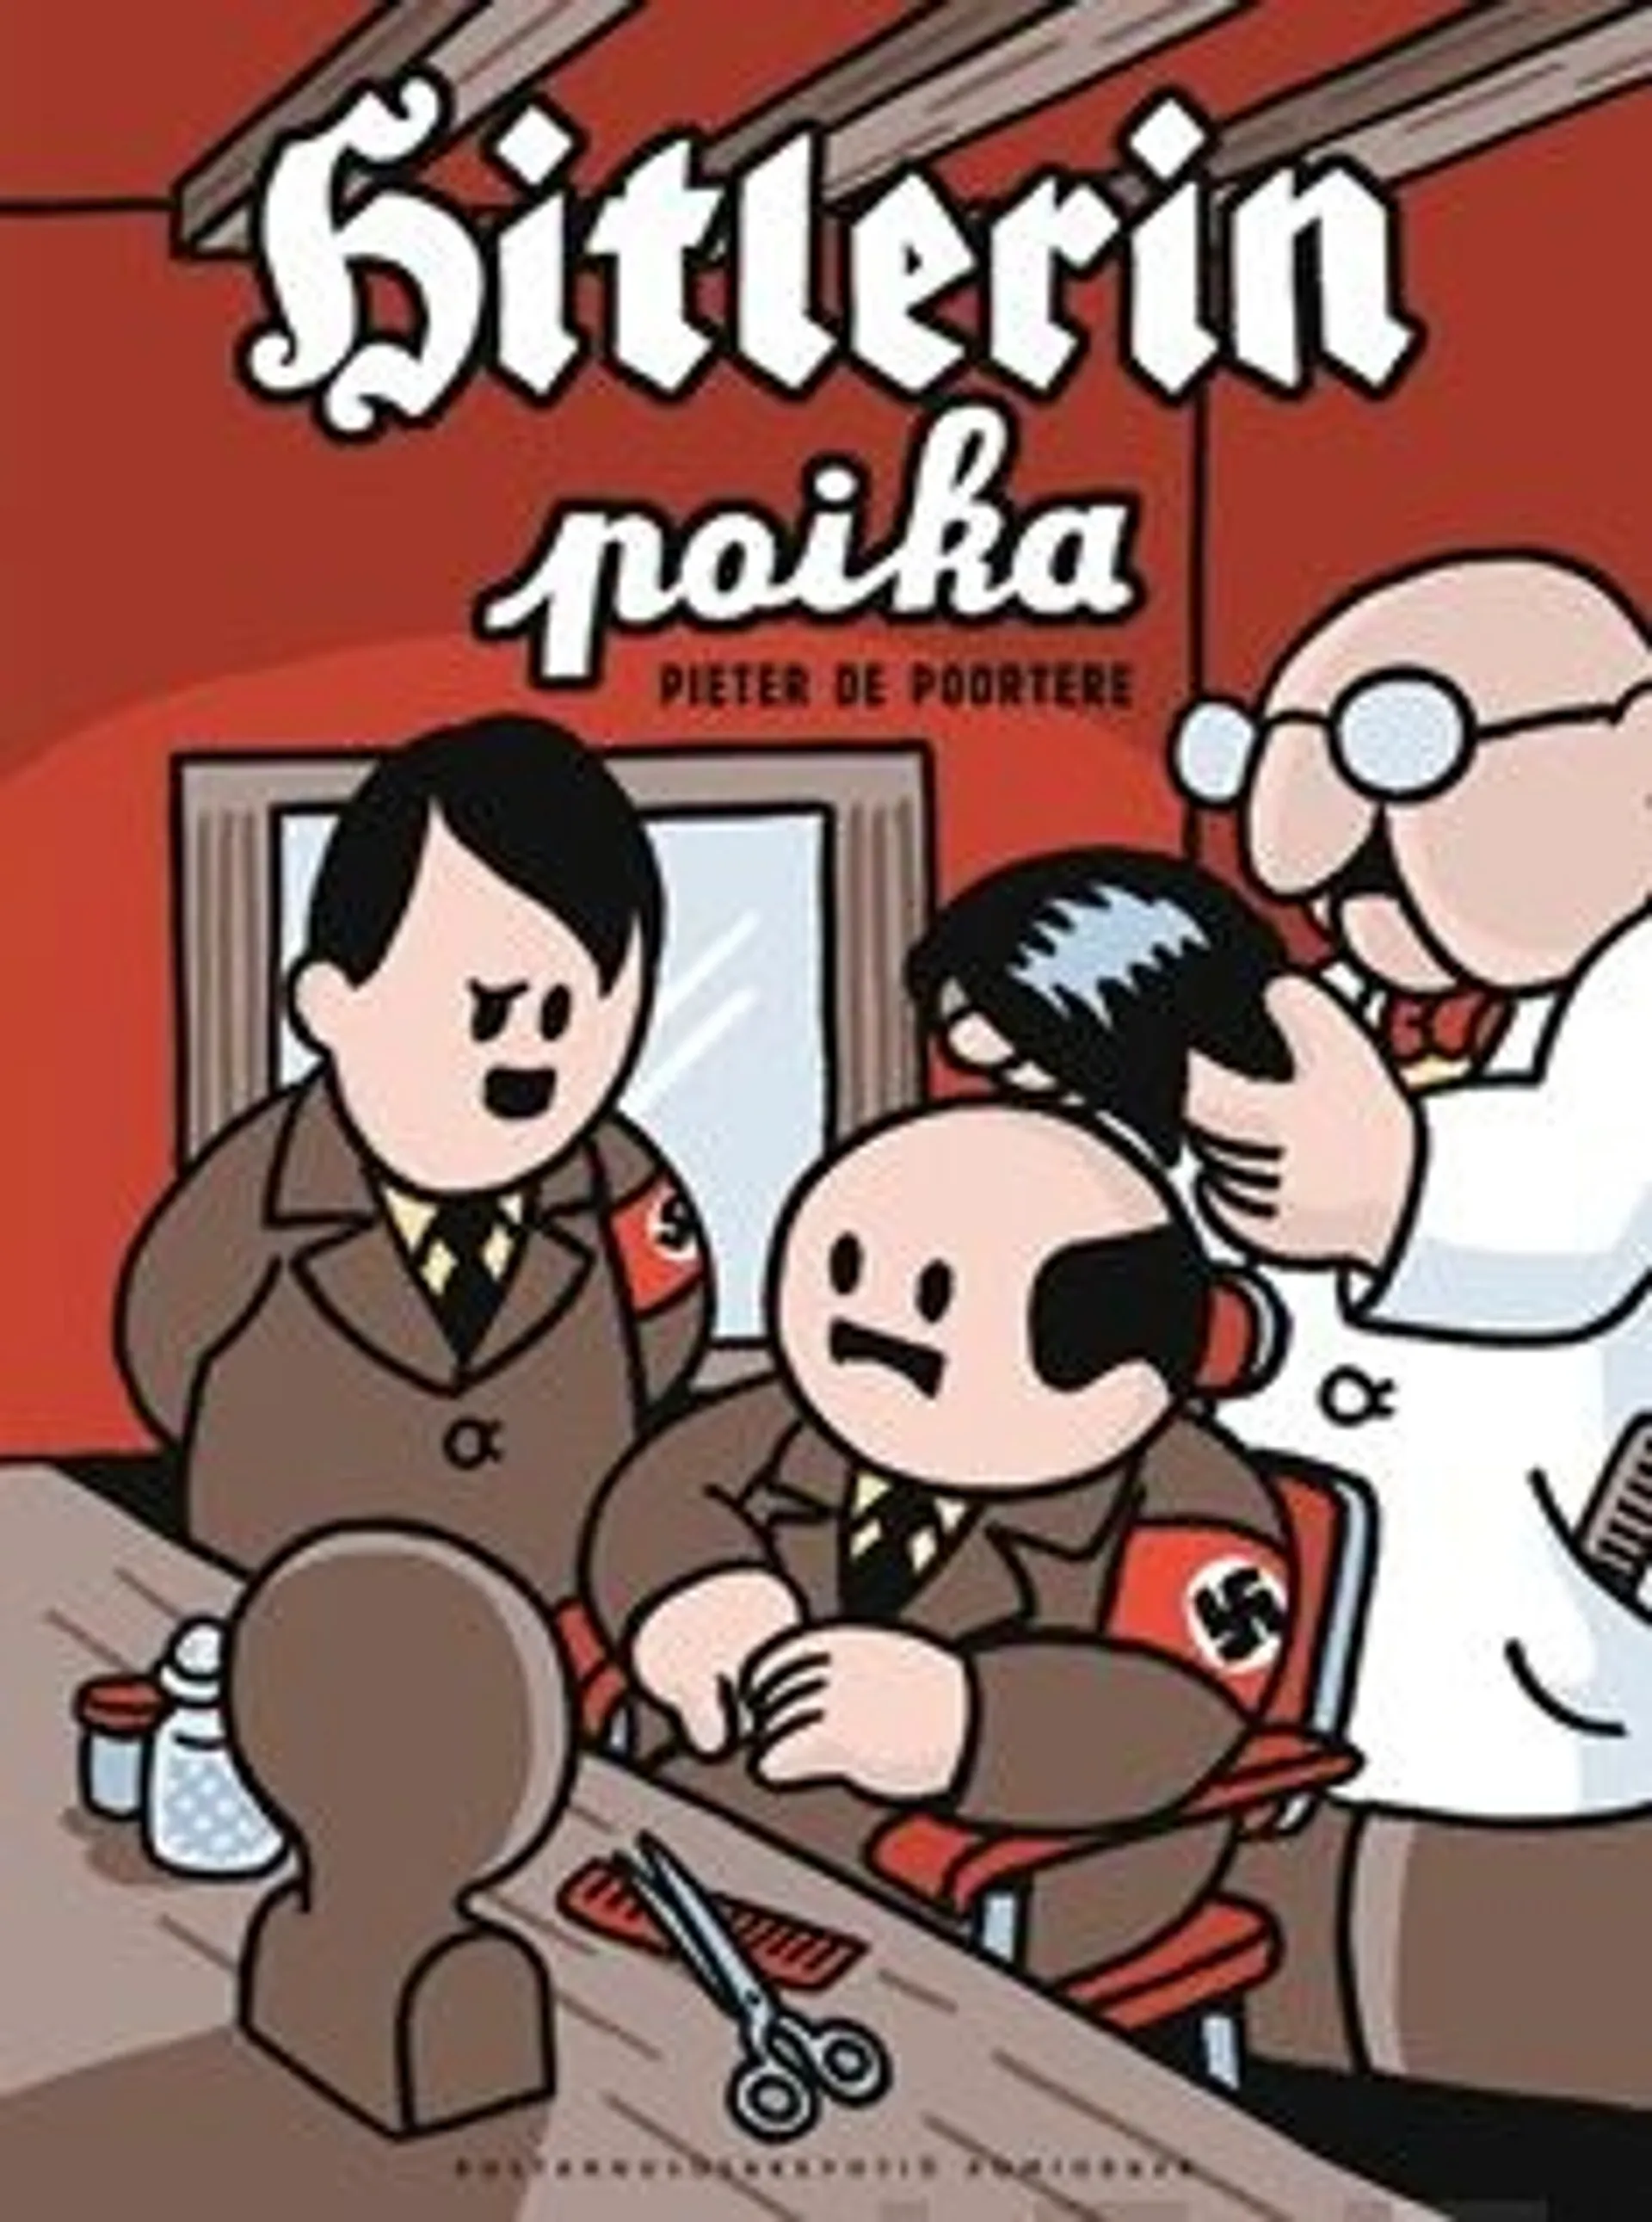 Poortere, Hitlerin poika